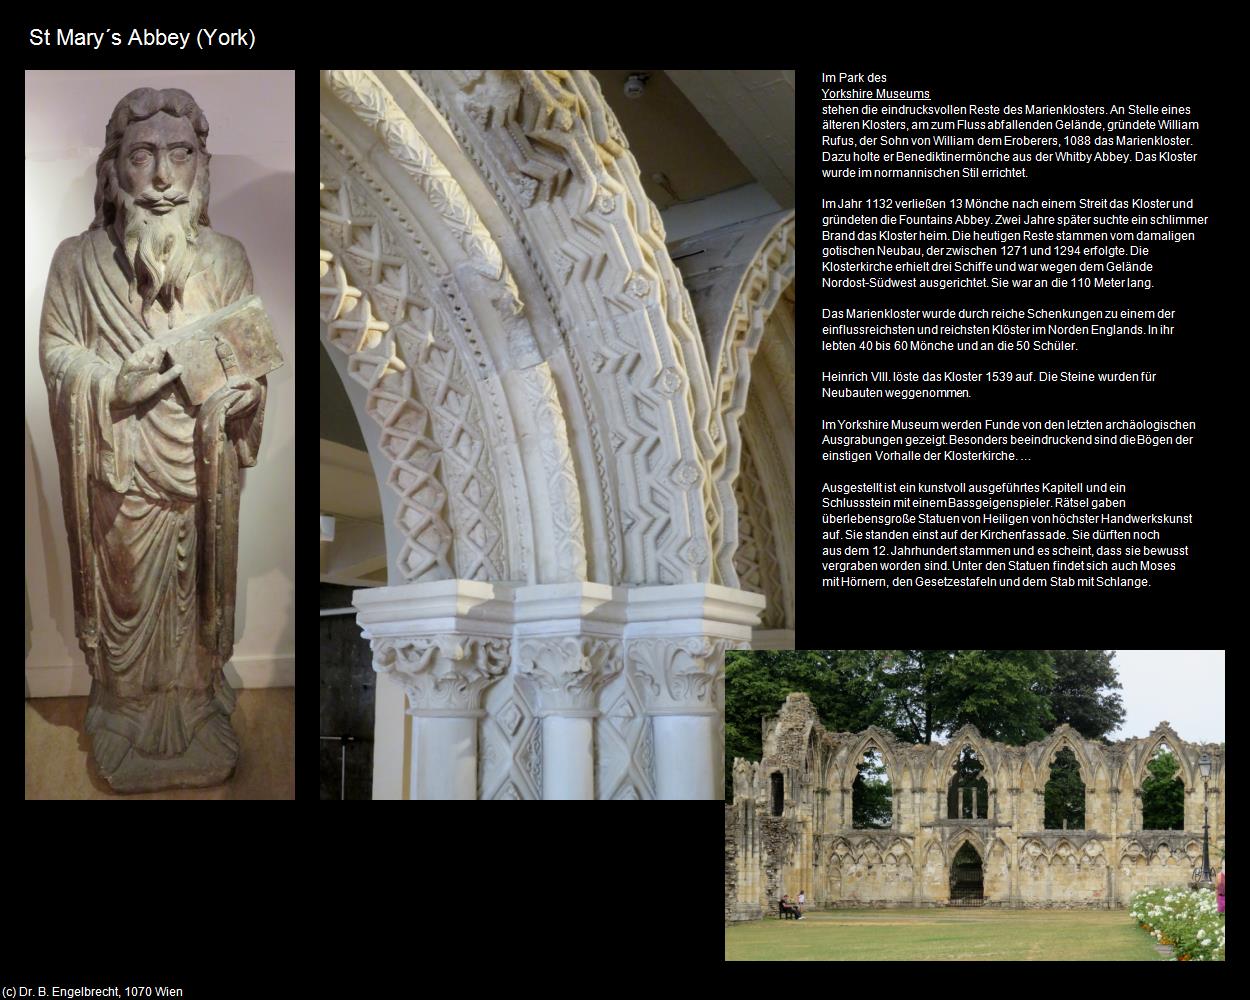 St Mary‘s Abbey (York, England) in Kulturatlas-ENGLAND und WALES(c)B.Engelbrecht